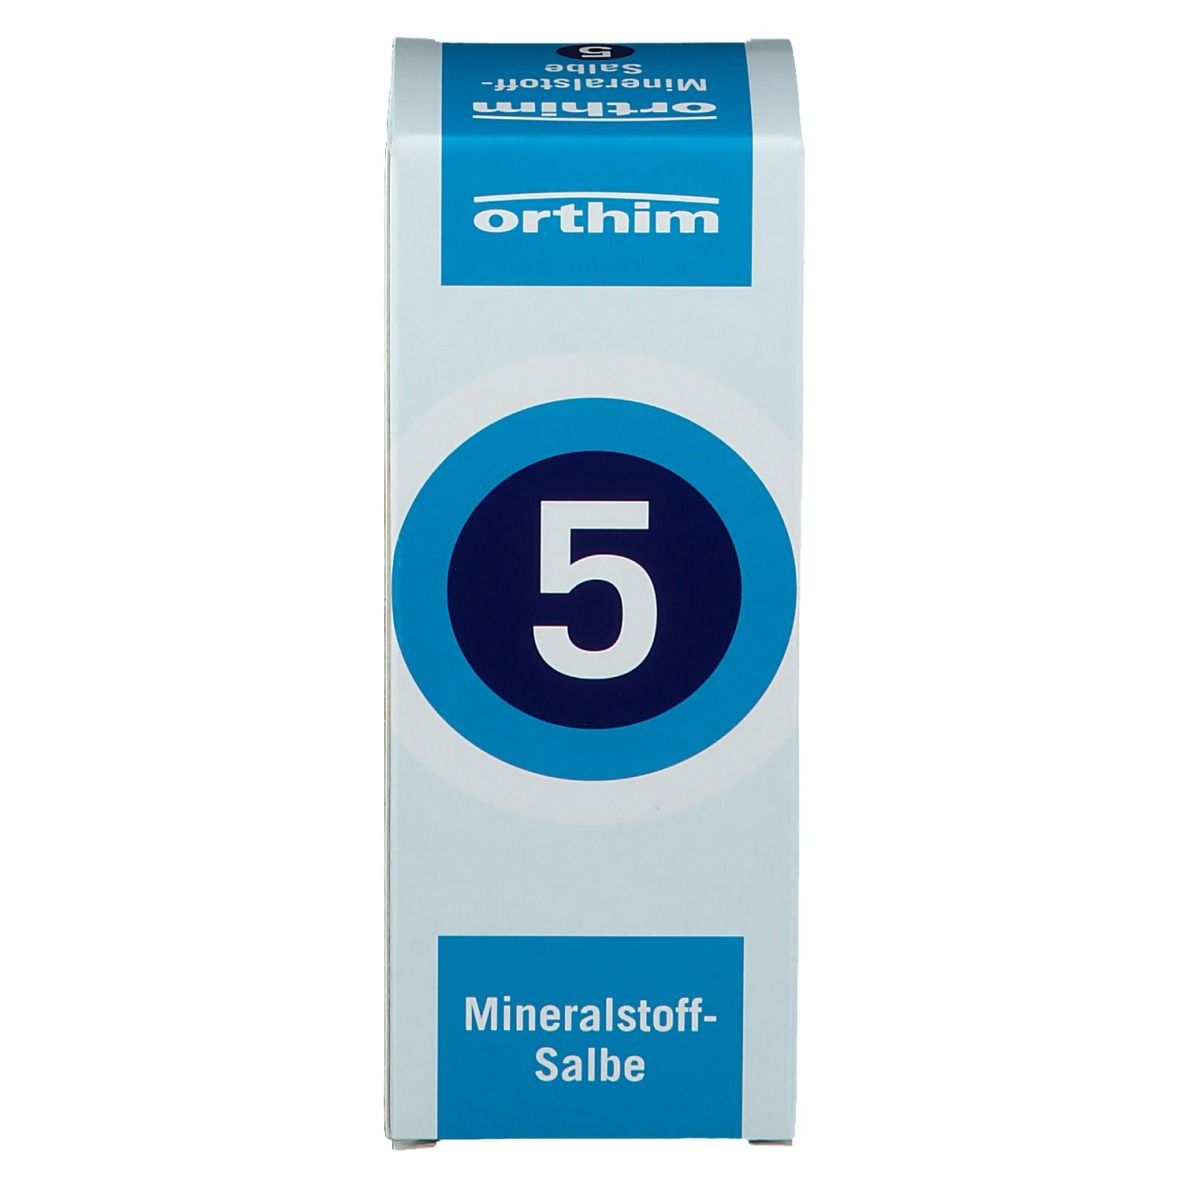 Orthim Mineralstoff-Salbe Nr. 5